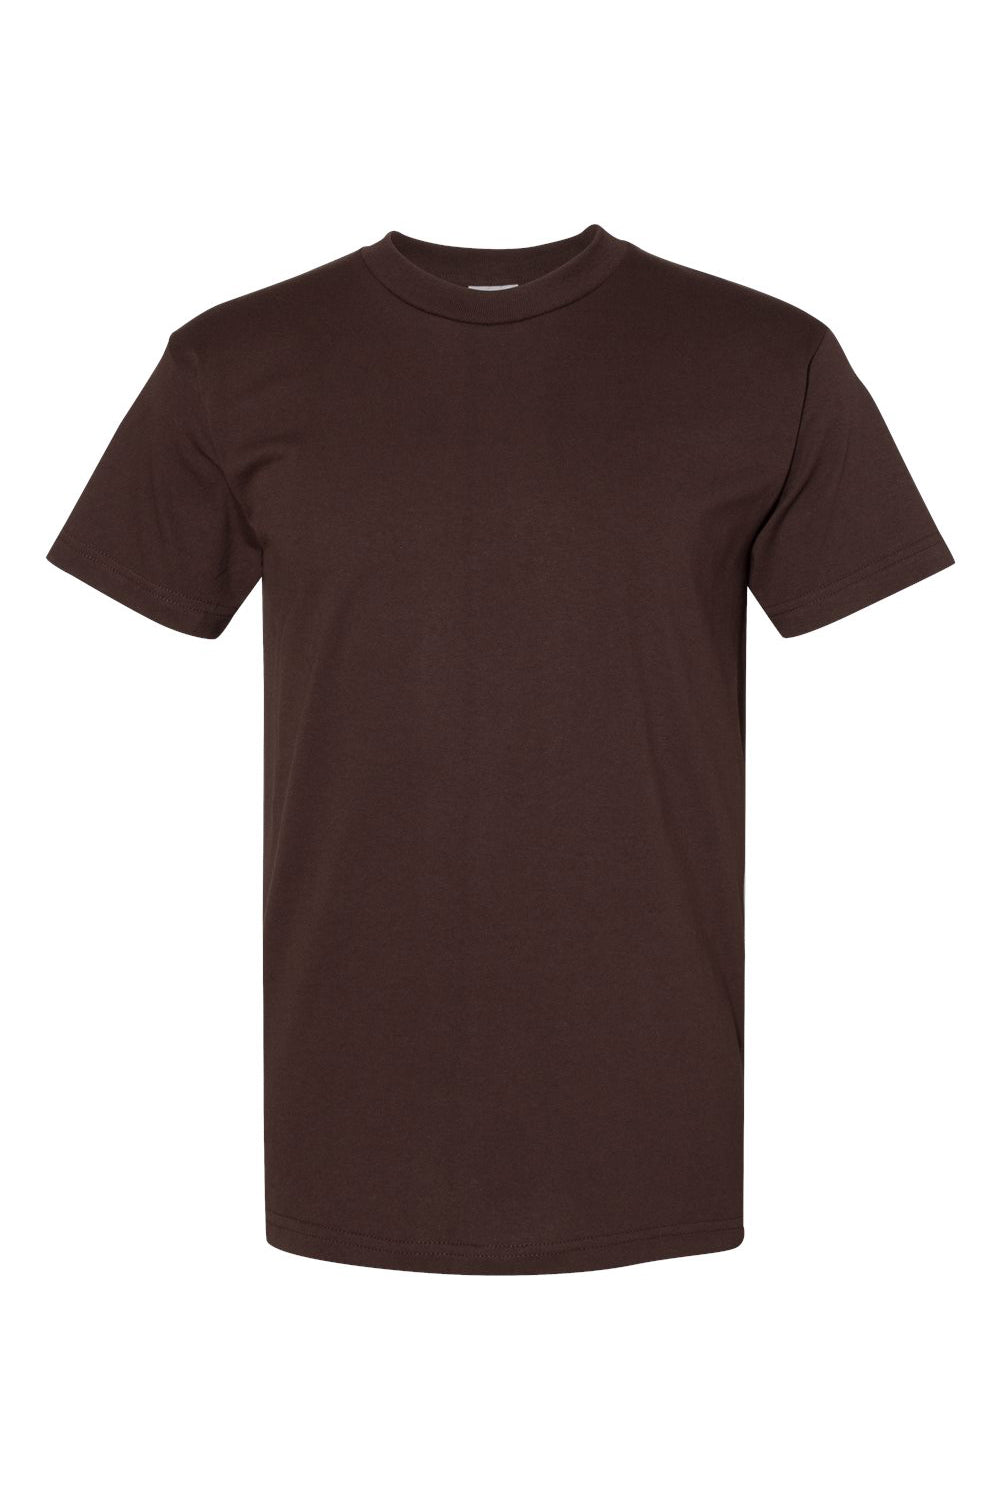 Bayside BA5100 Mens USA Made Short Sleeve Crewneck T-Shirt Chocolate Brown Flat Front